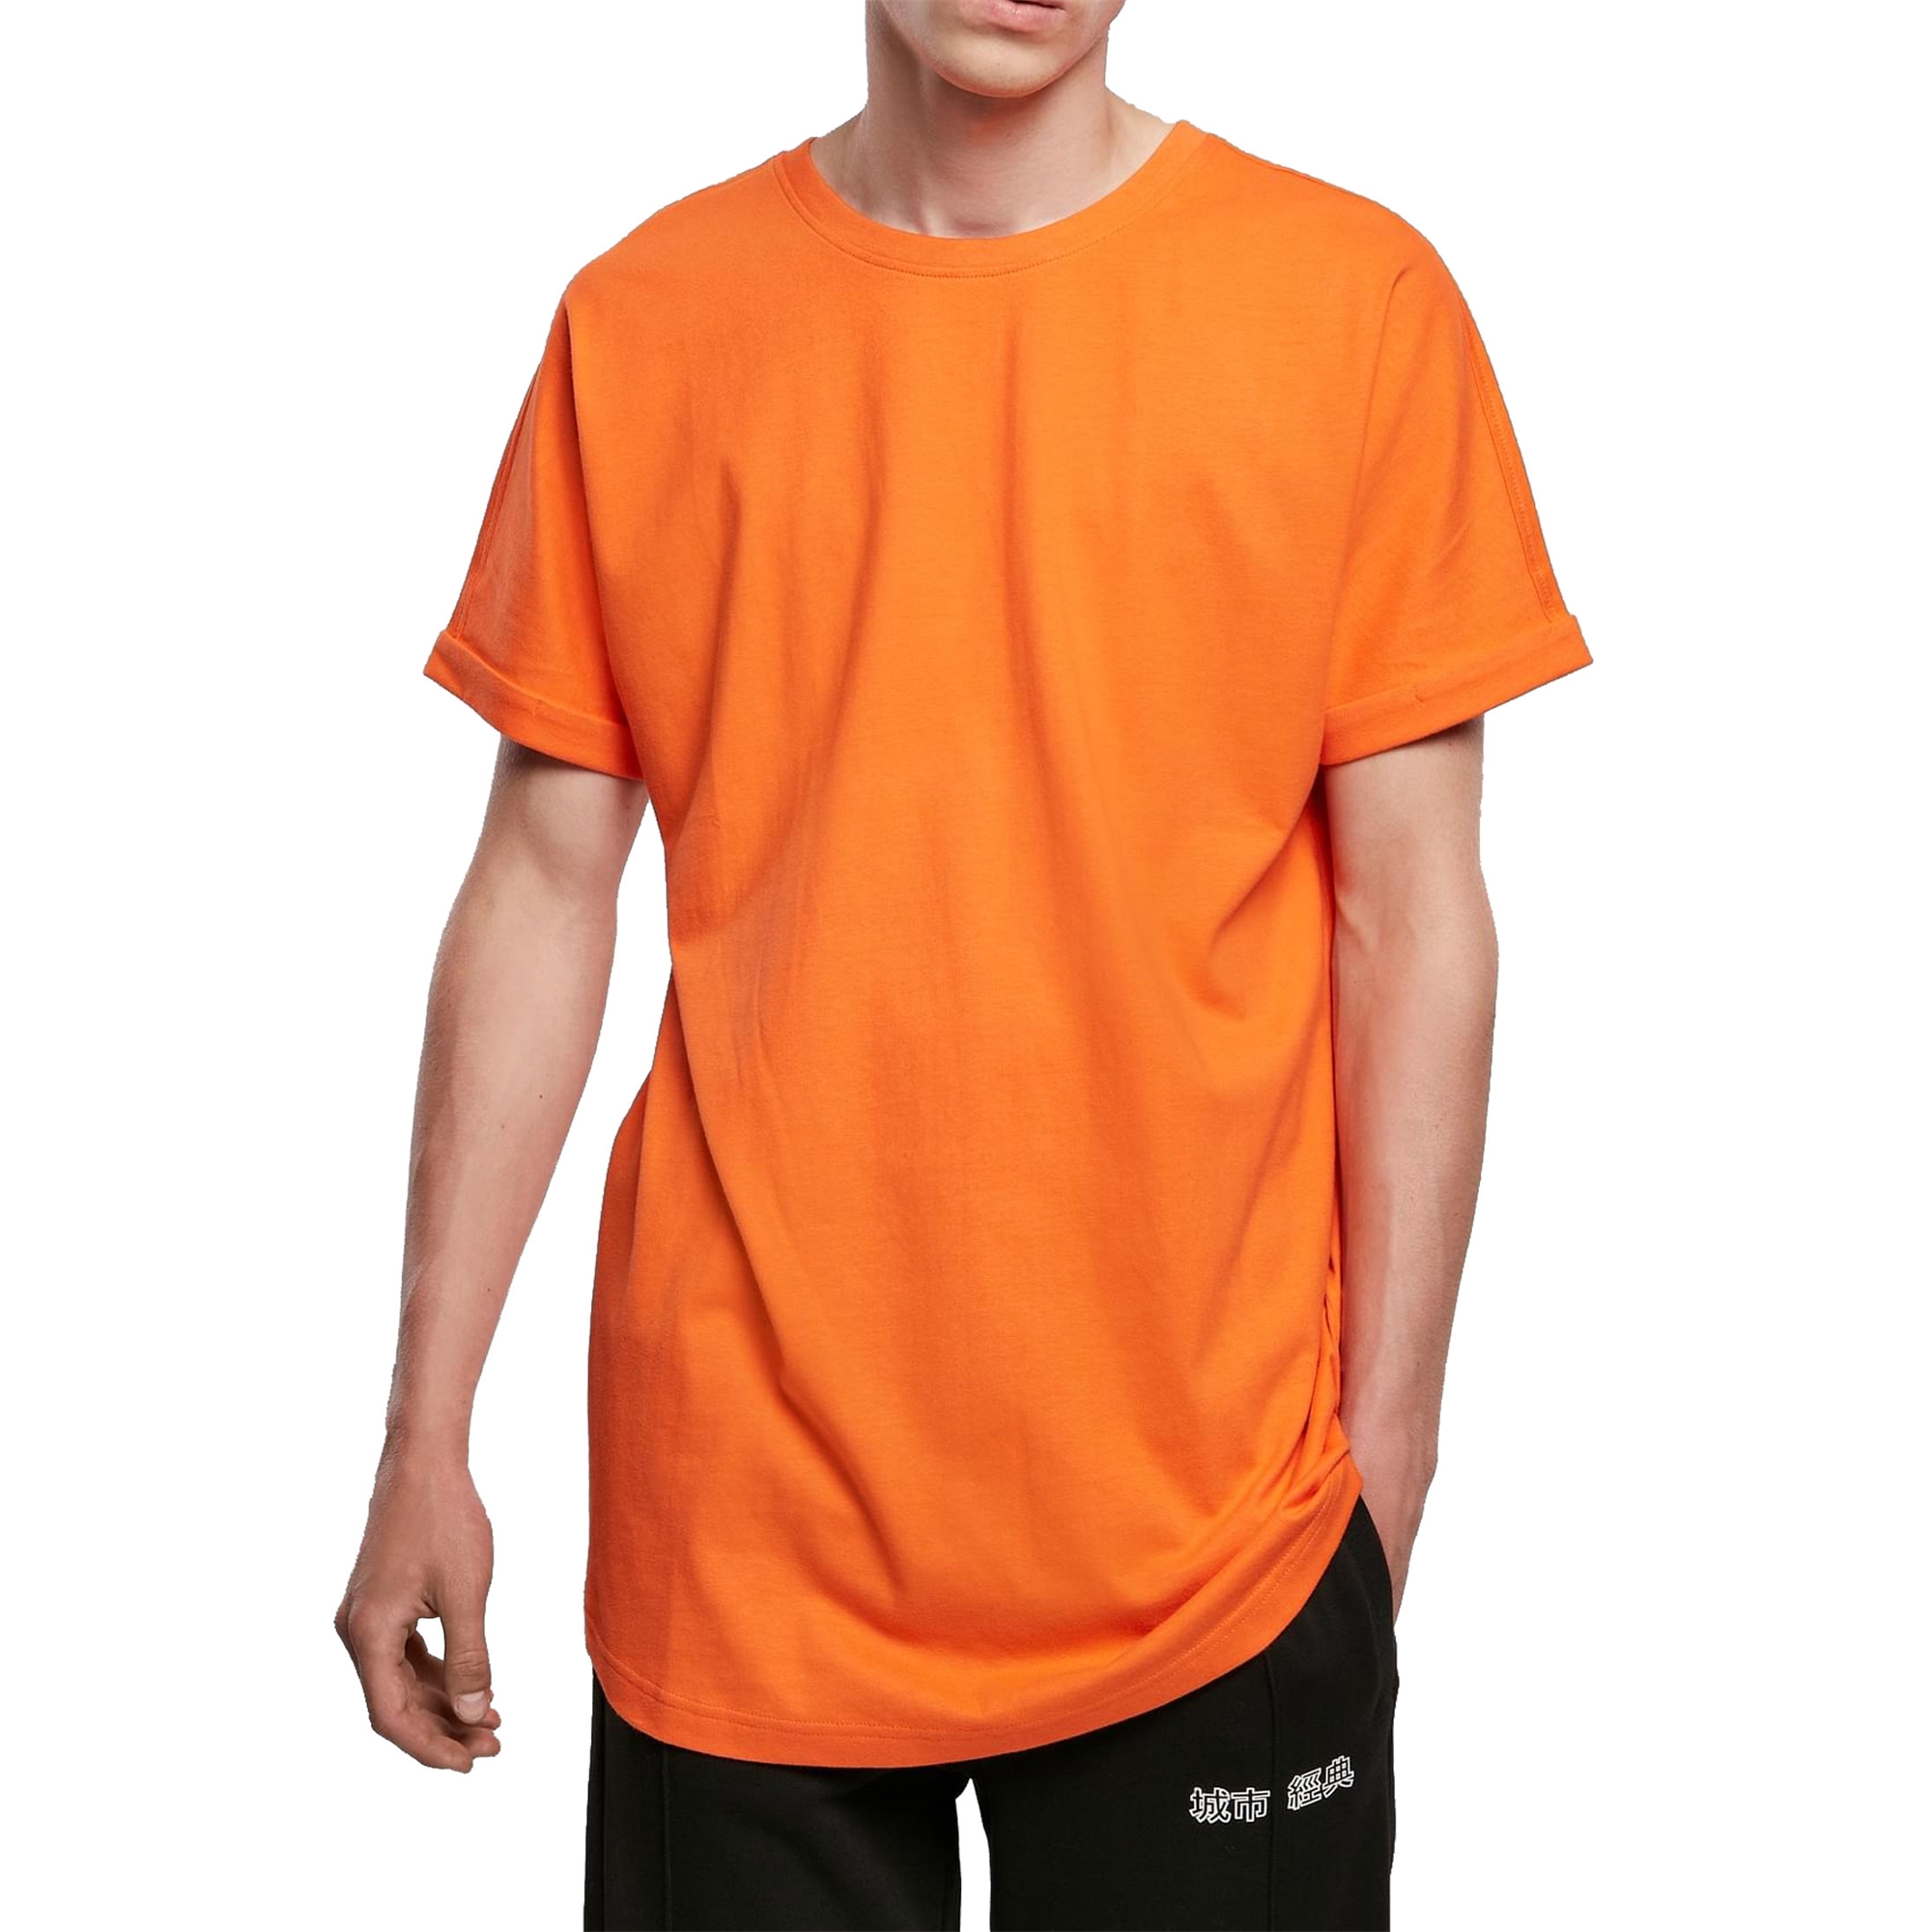 Urban Turnup oversize extra Tee eBay Long Classics Shirt Shaped lang Herren | T-Shirt